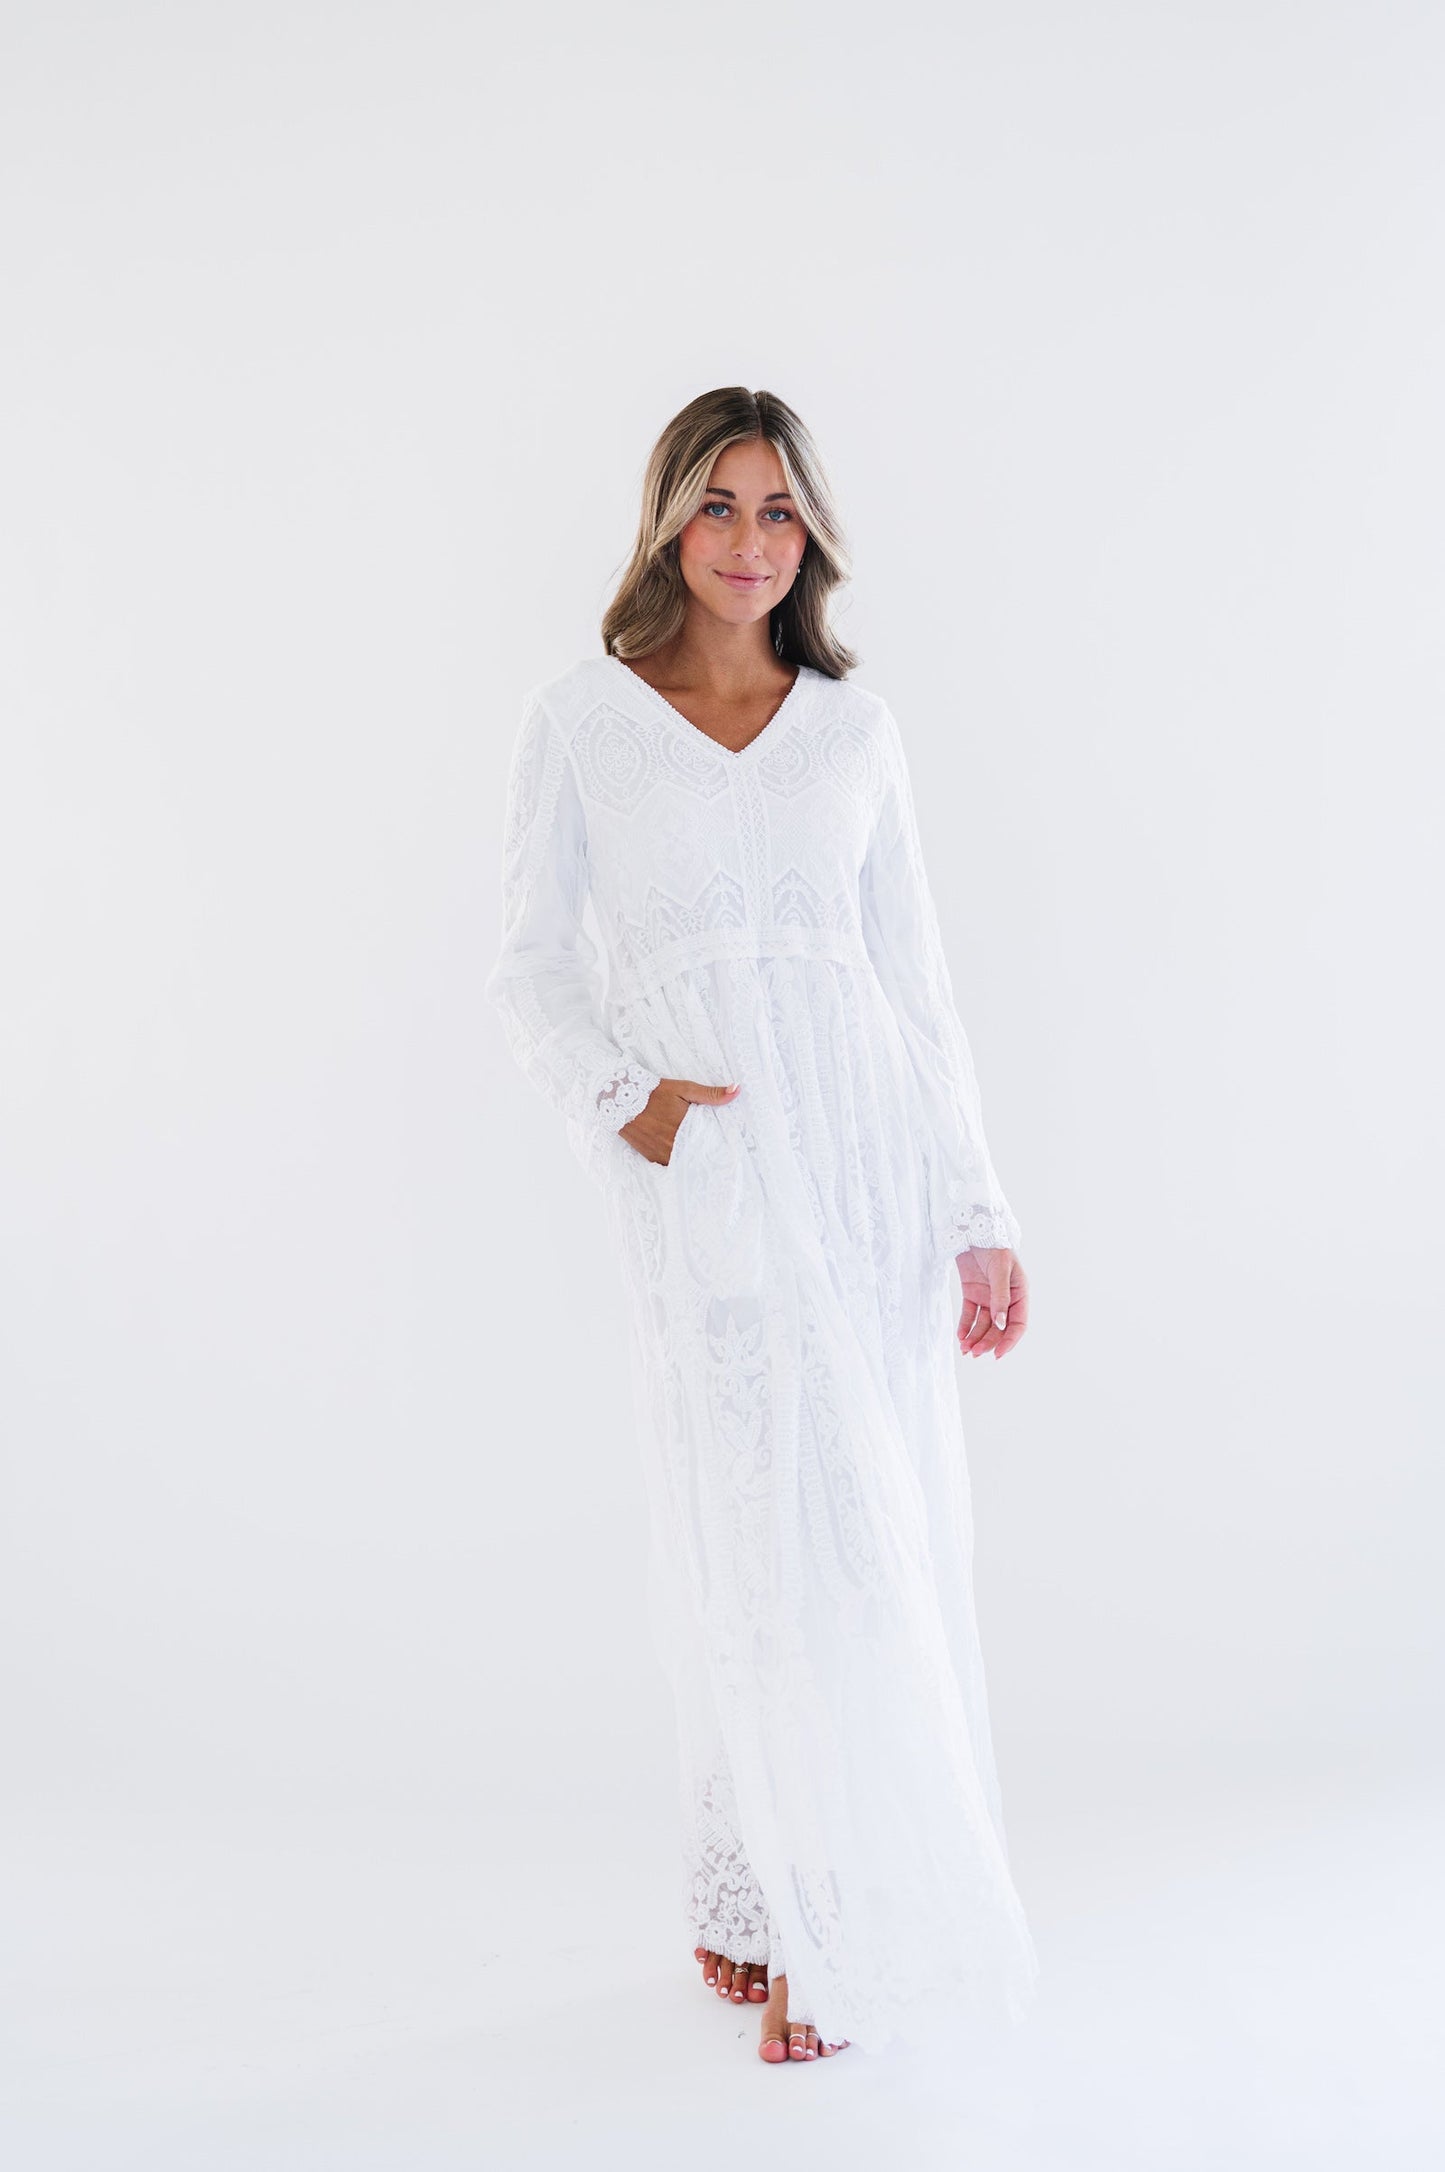 White, long sleeved maxi dress